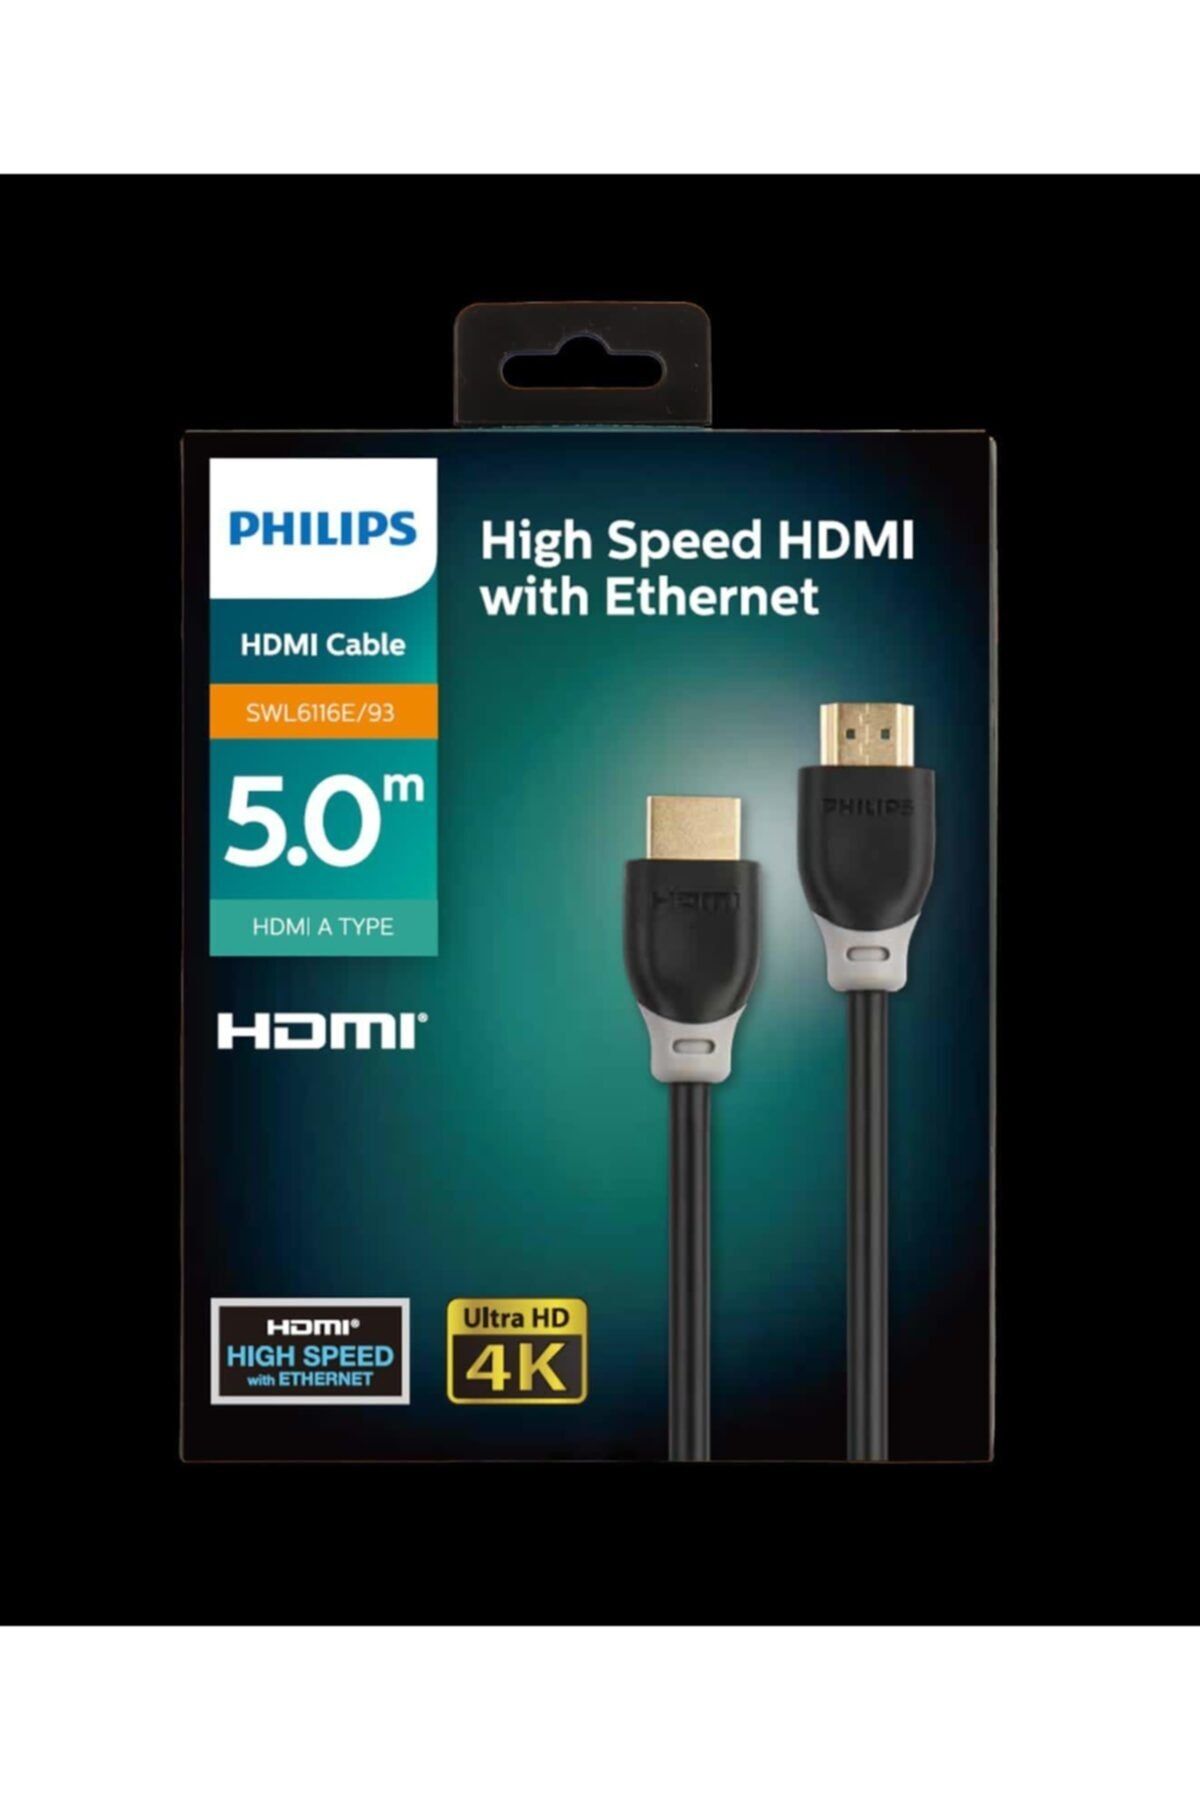 Philips Phılıps Hdmı 5.0 M Hight Speed With Ethernet